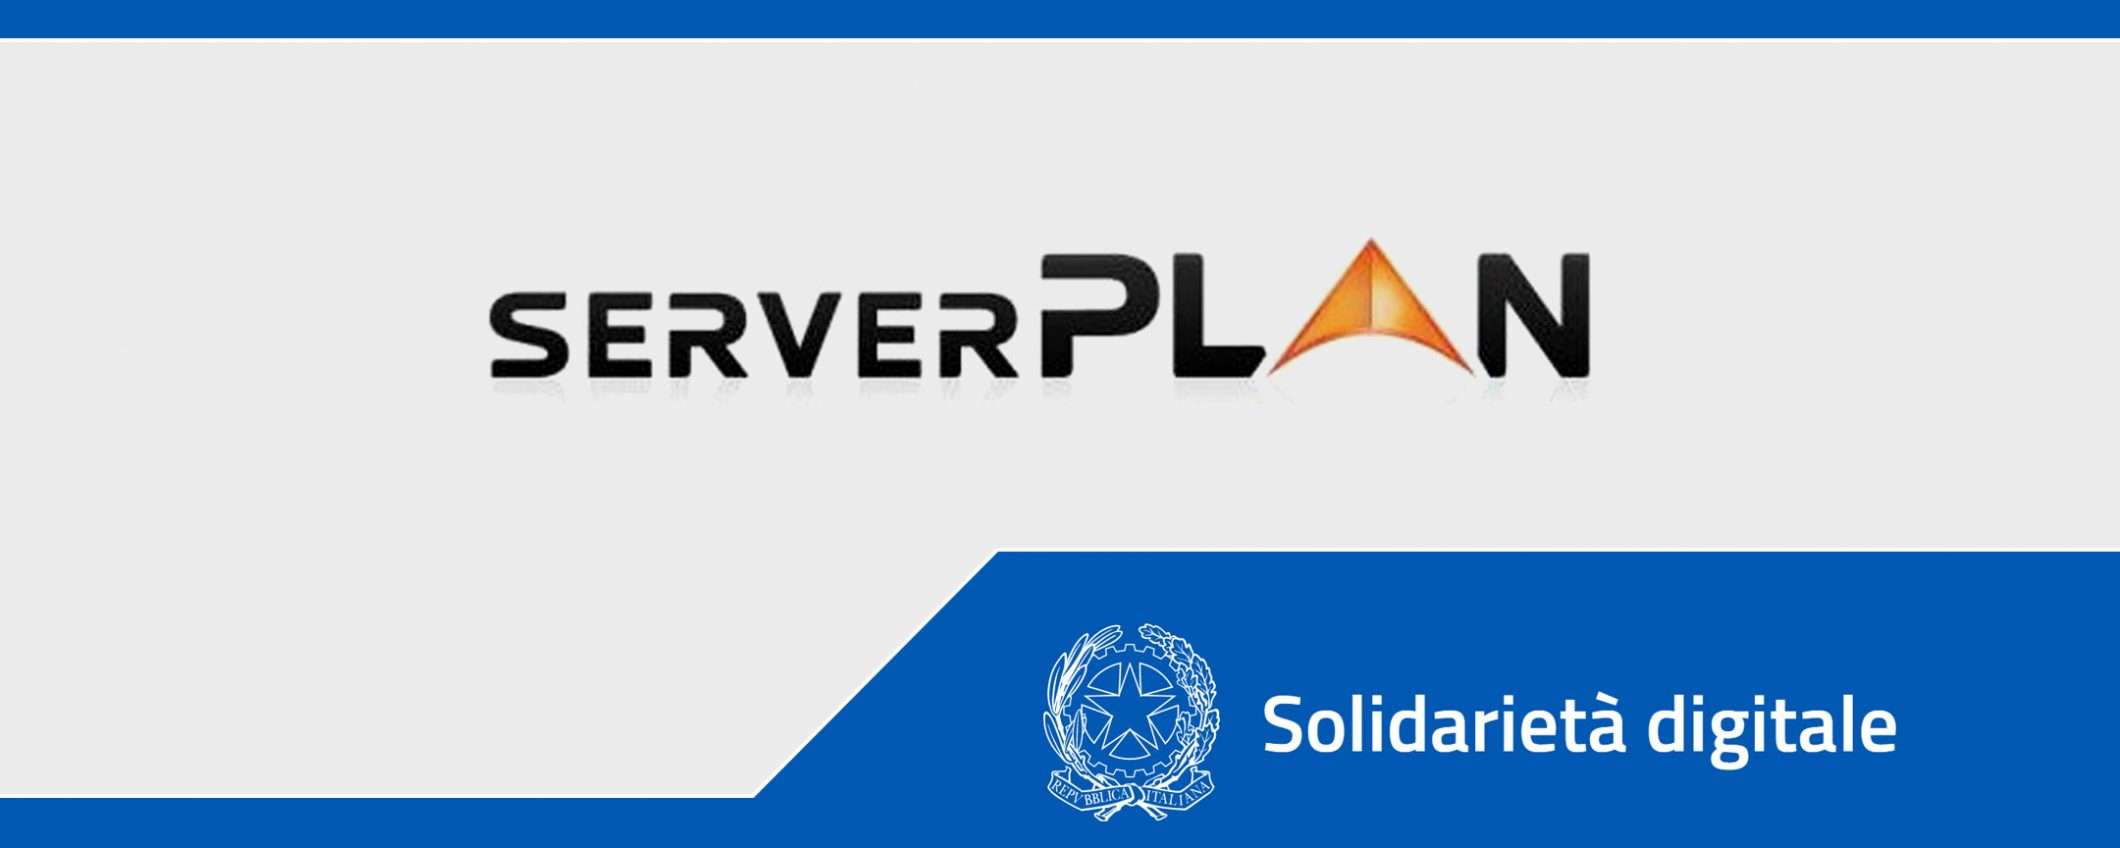 Solidarietà Digitale: Serverplan, A place for YOU